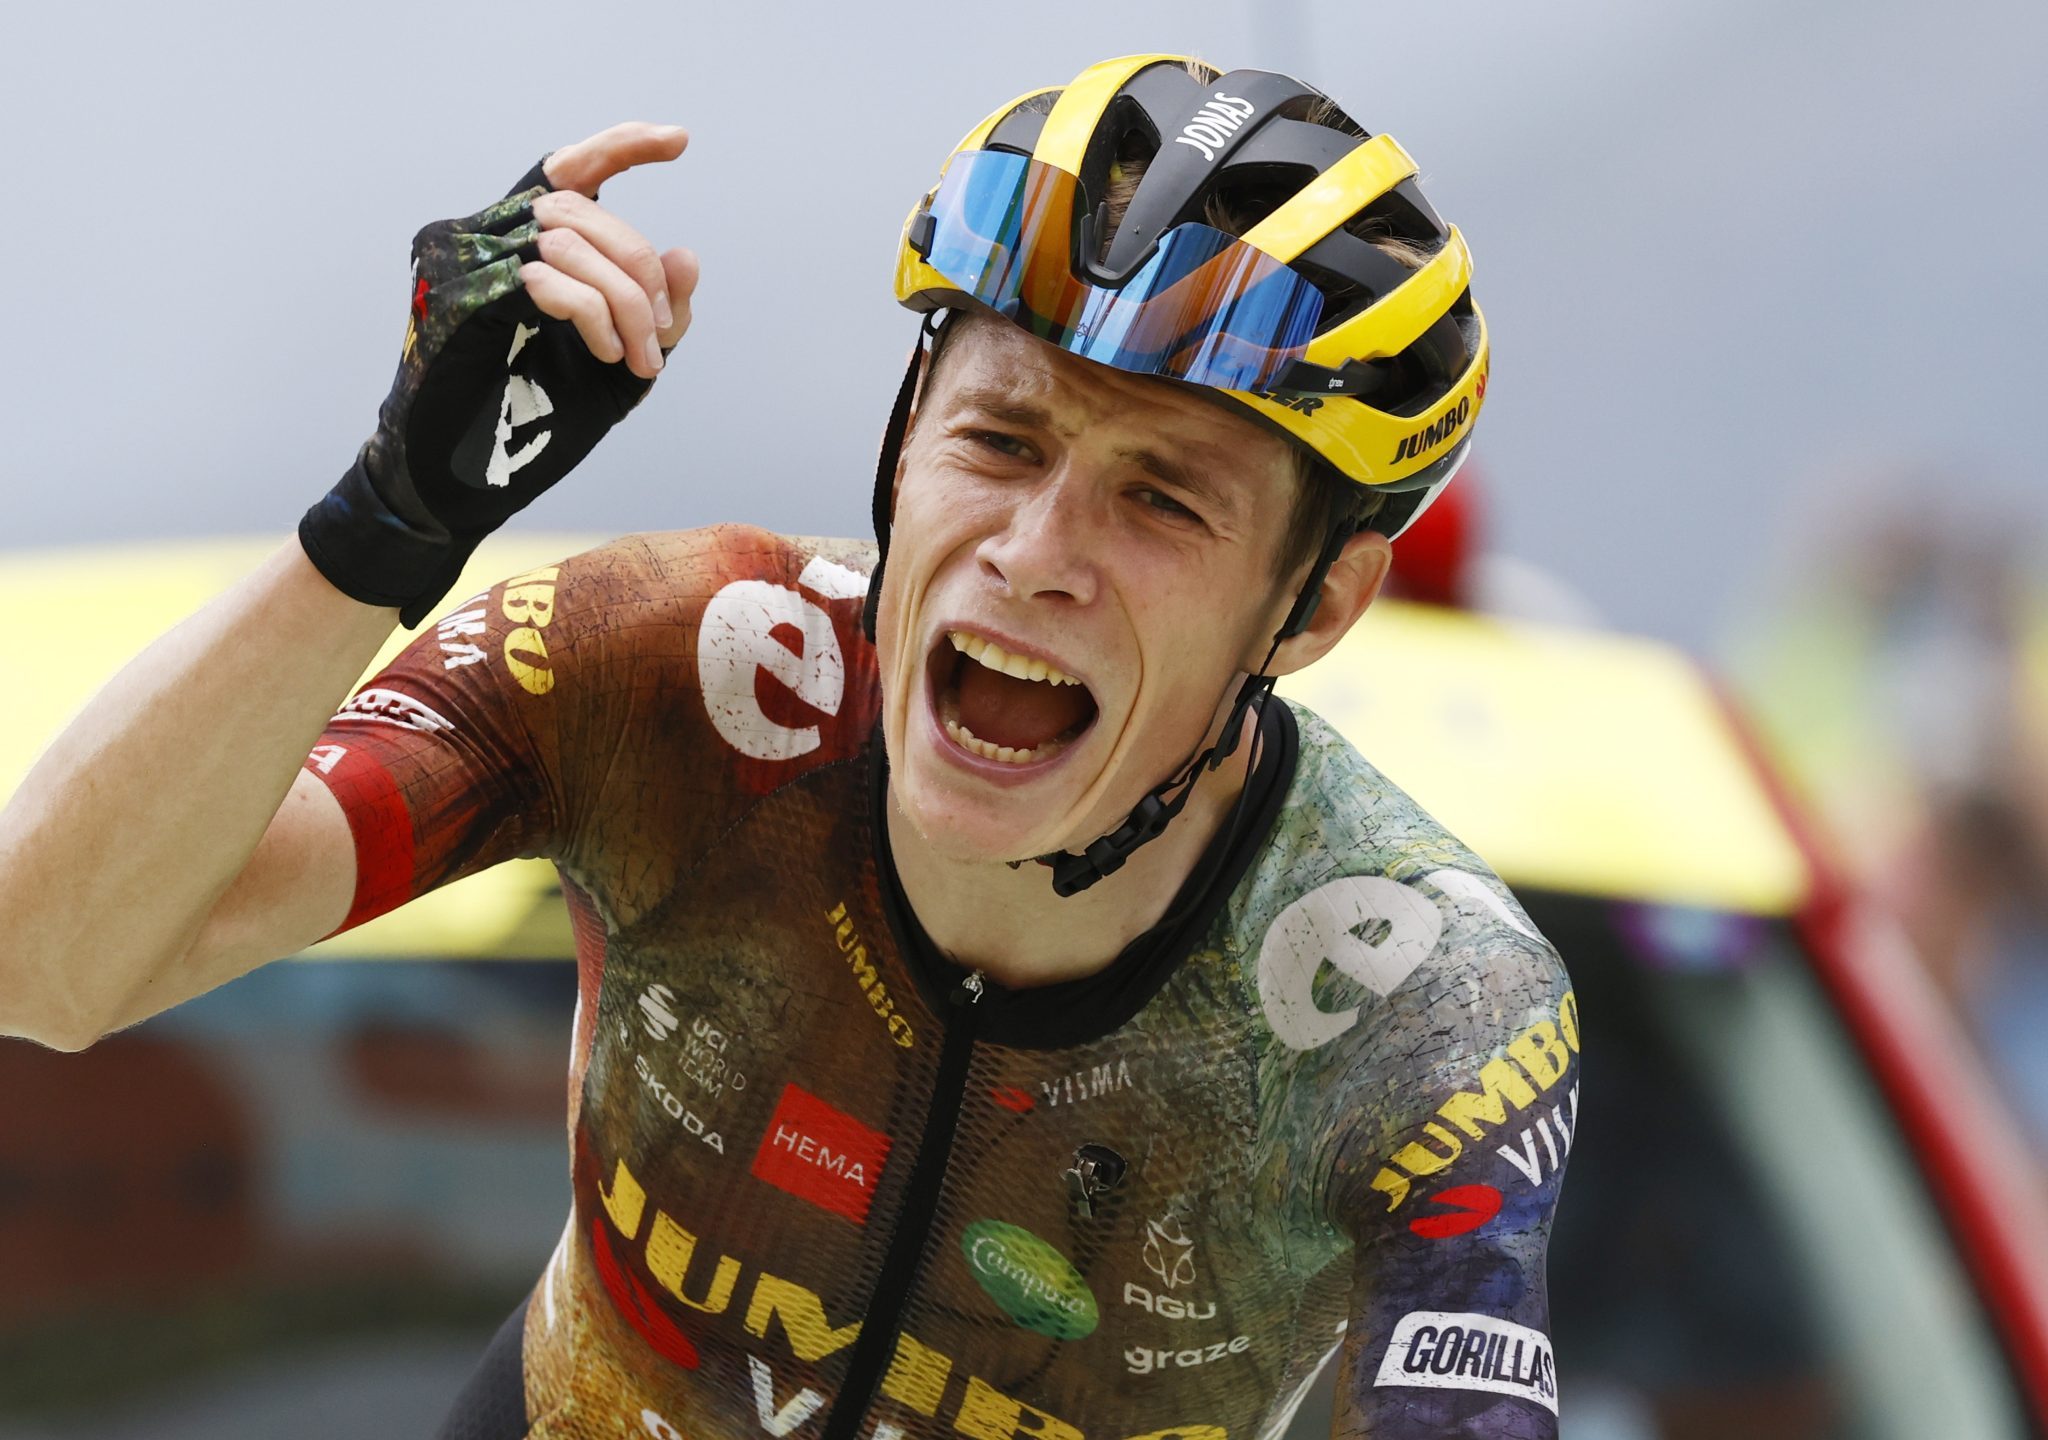 De Deense wielrenner Jonas Vingegaard won de 11e etappe van de Tour de France. (Foto ANP)